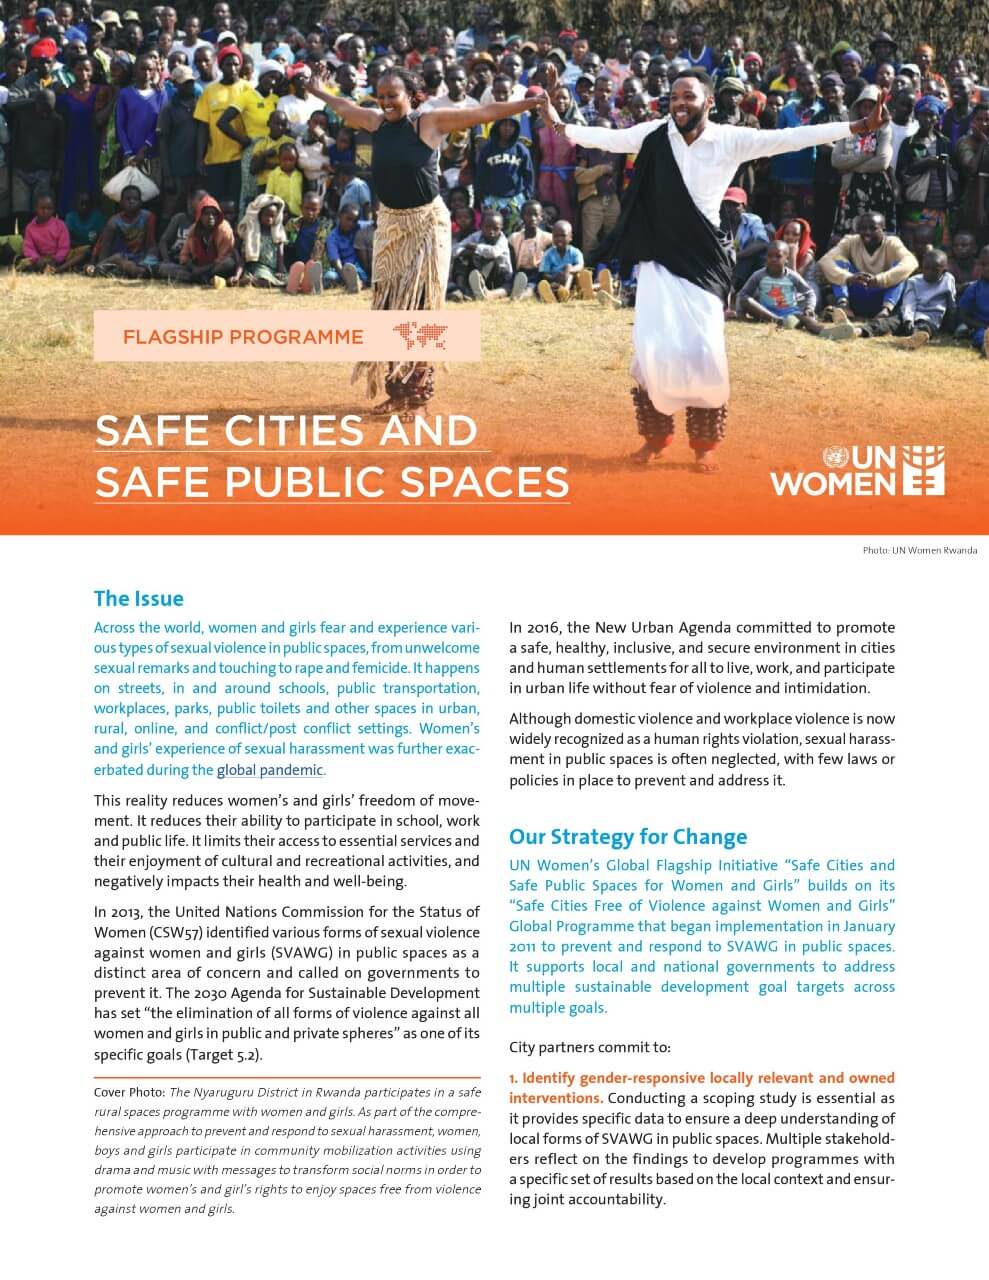 Safe Cities and Safe Public Spaces - UN Women Flagship Programme Brief